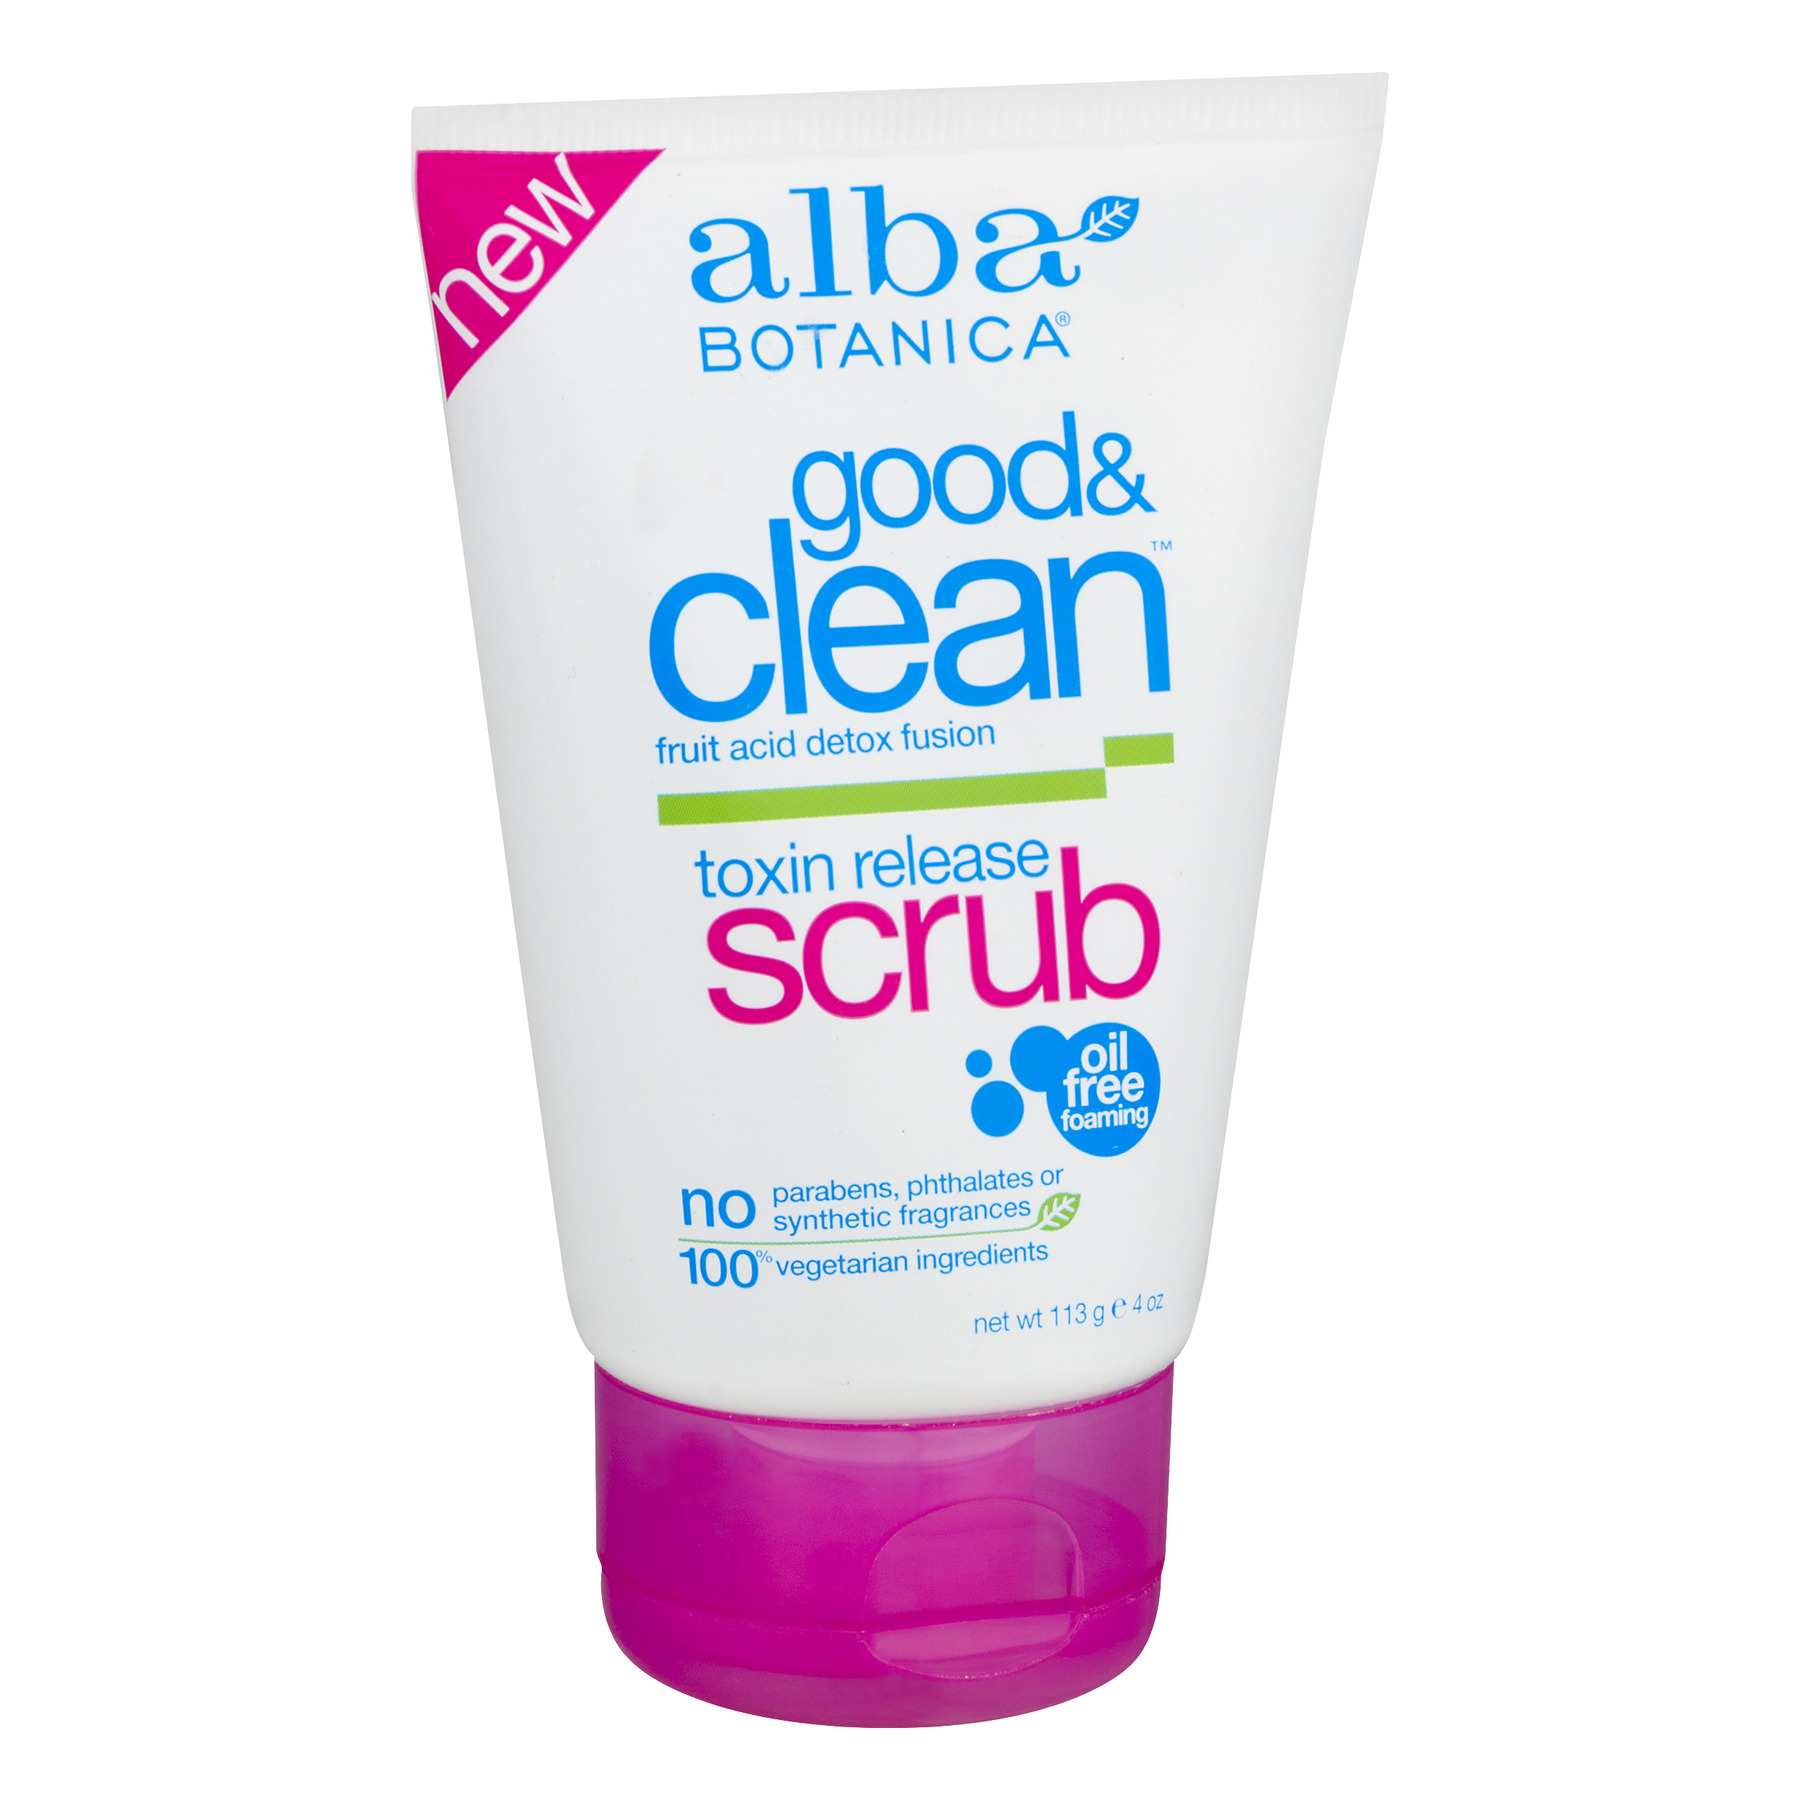 Alba Botanica Good & Clean Toxin Release Scrub, 4 oz. - image 4 of 6